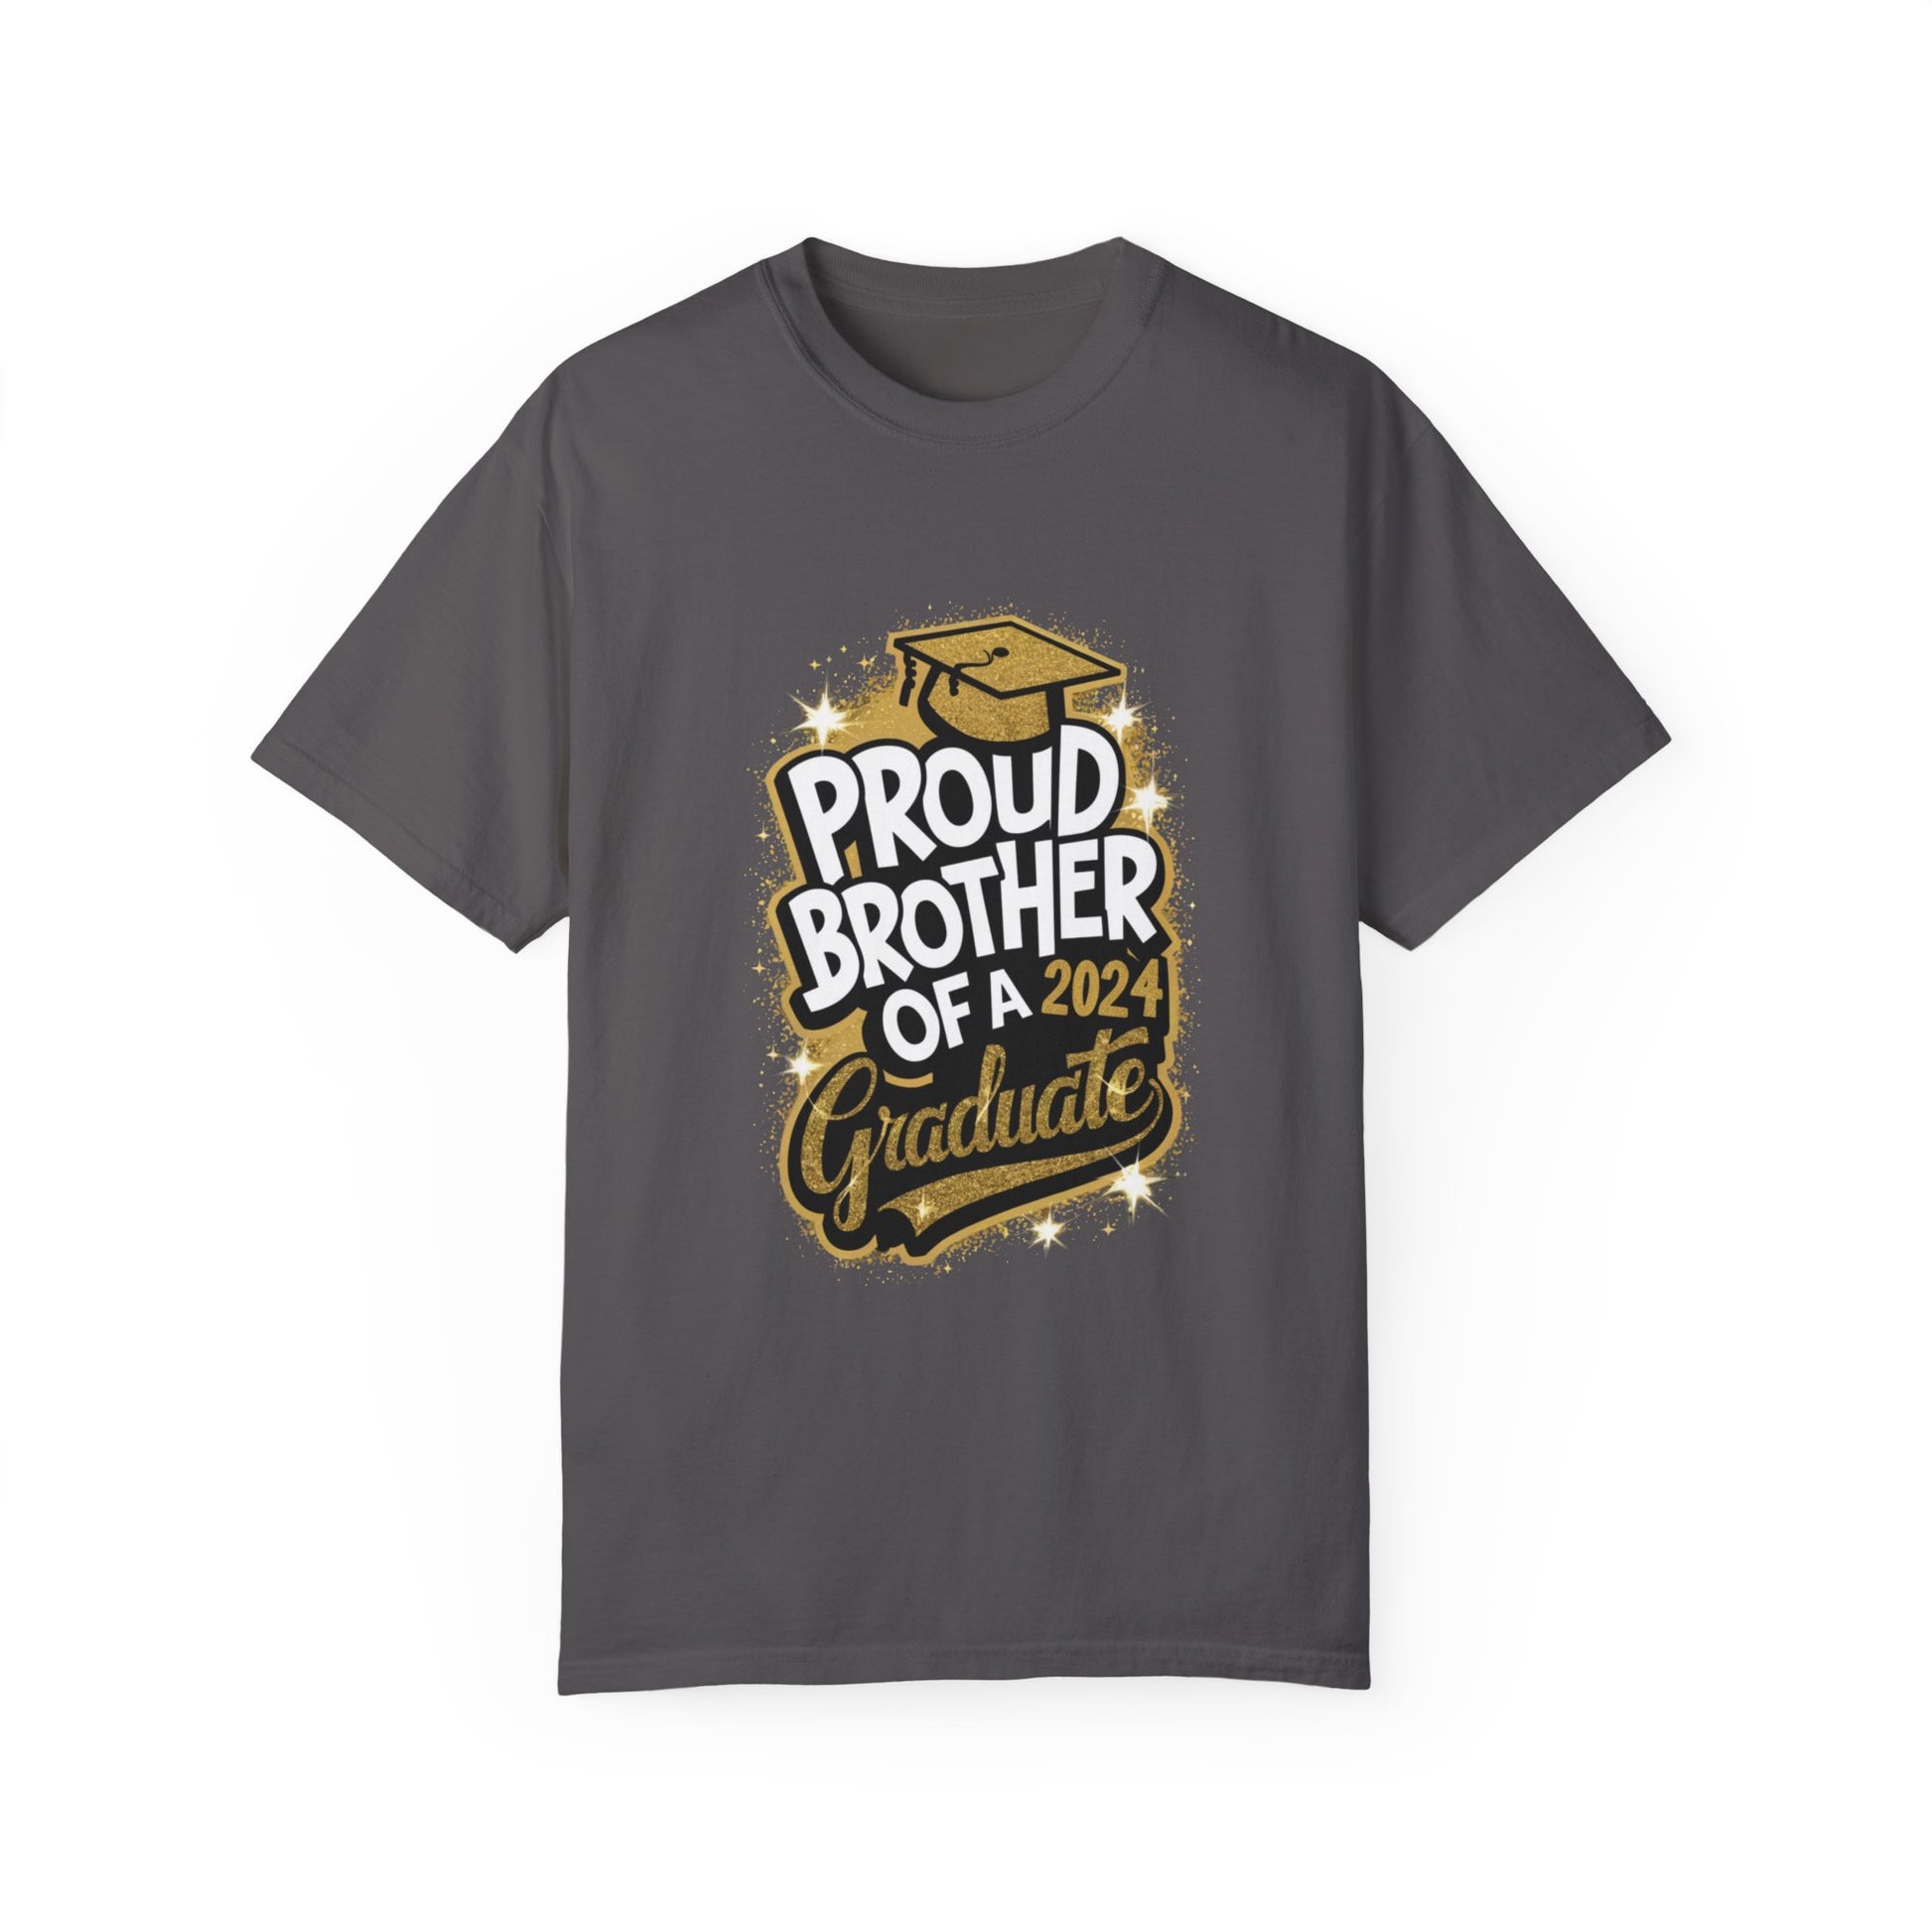 Proud Brother of a 2024 Graduate Unisex Garment-dyed T-shirt Cotton Funny Humorous Graphic Soft Premium Unisex Men Women Graphite T-shirt Birthday Gift-8